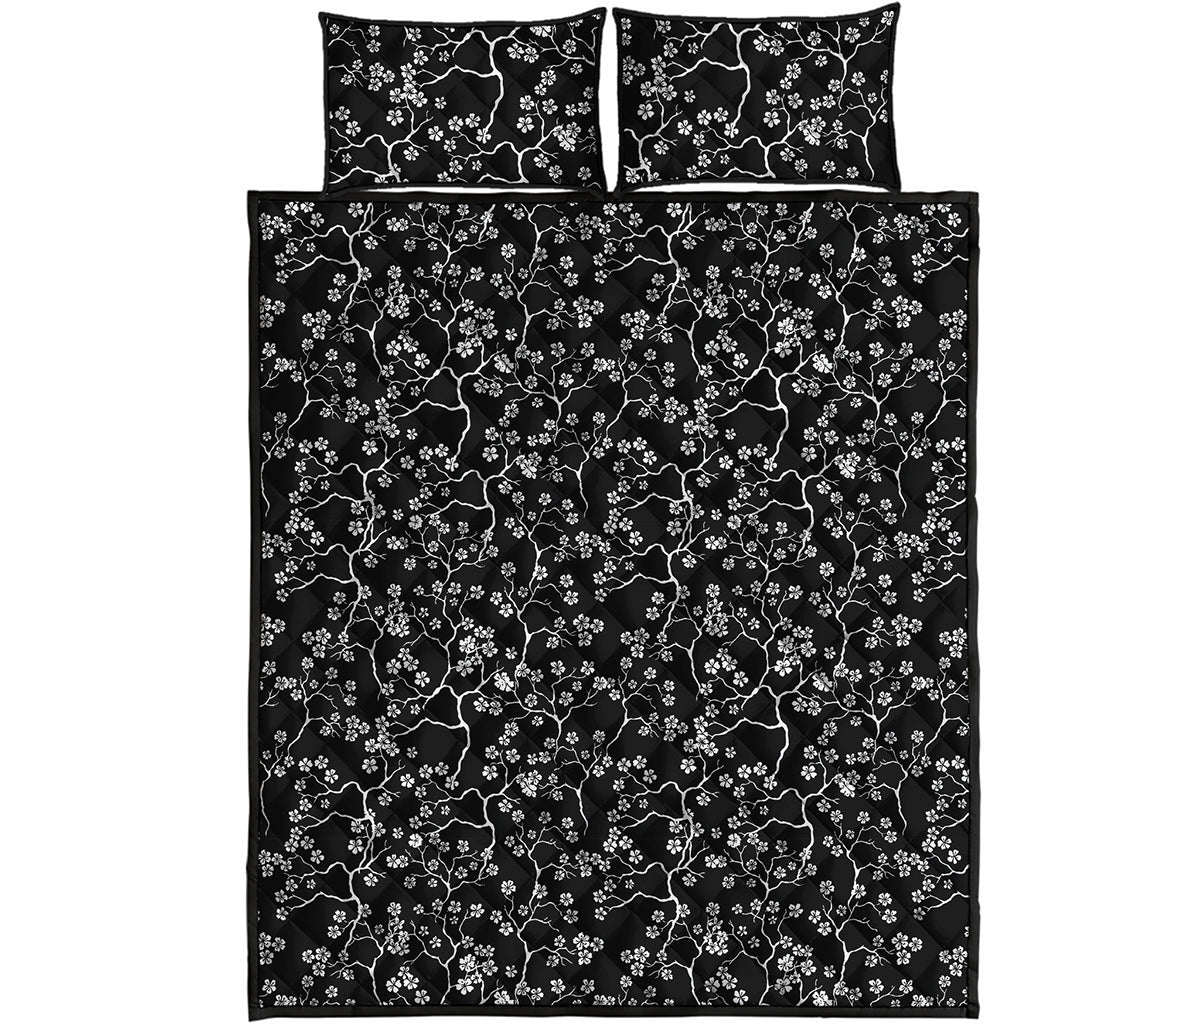 Black And White Cherry Blossom Print Quilt Bed Set